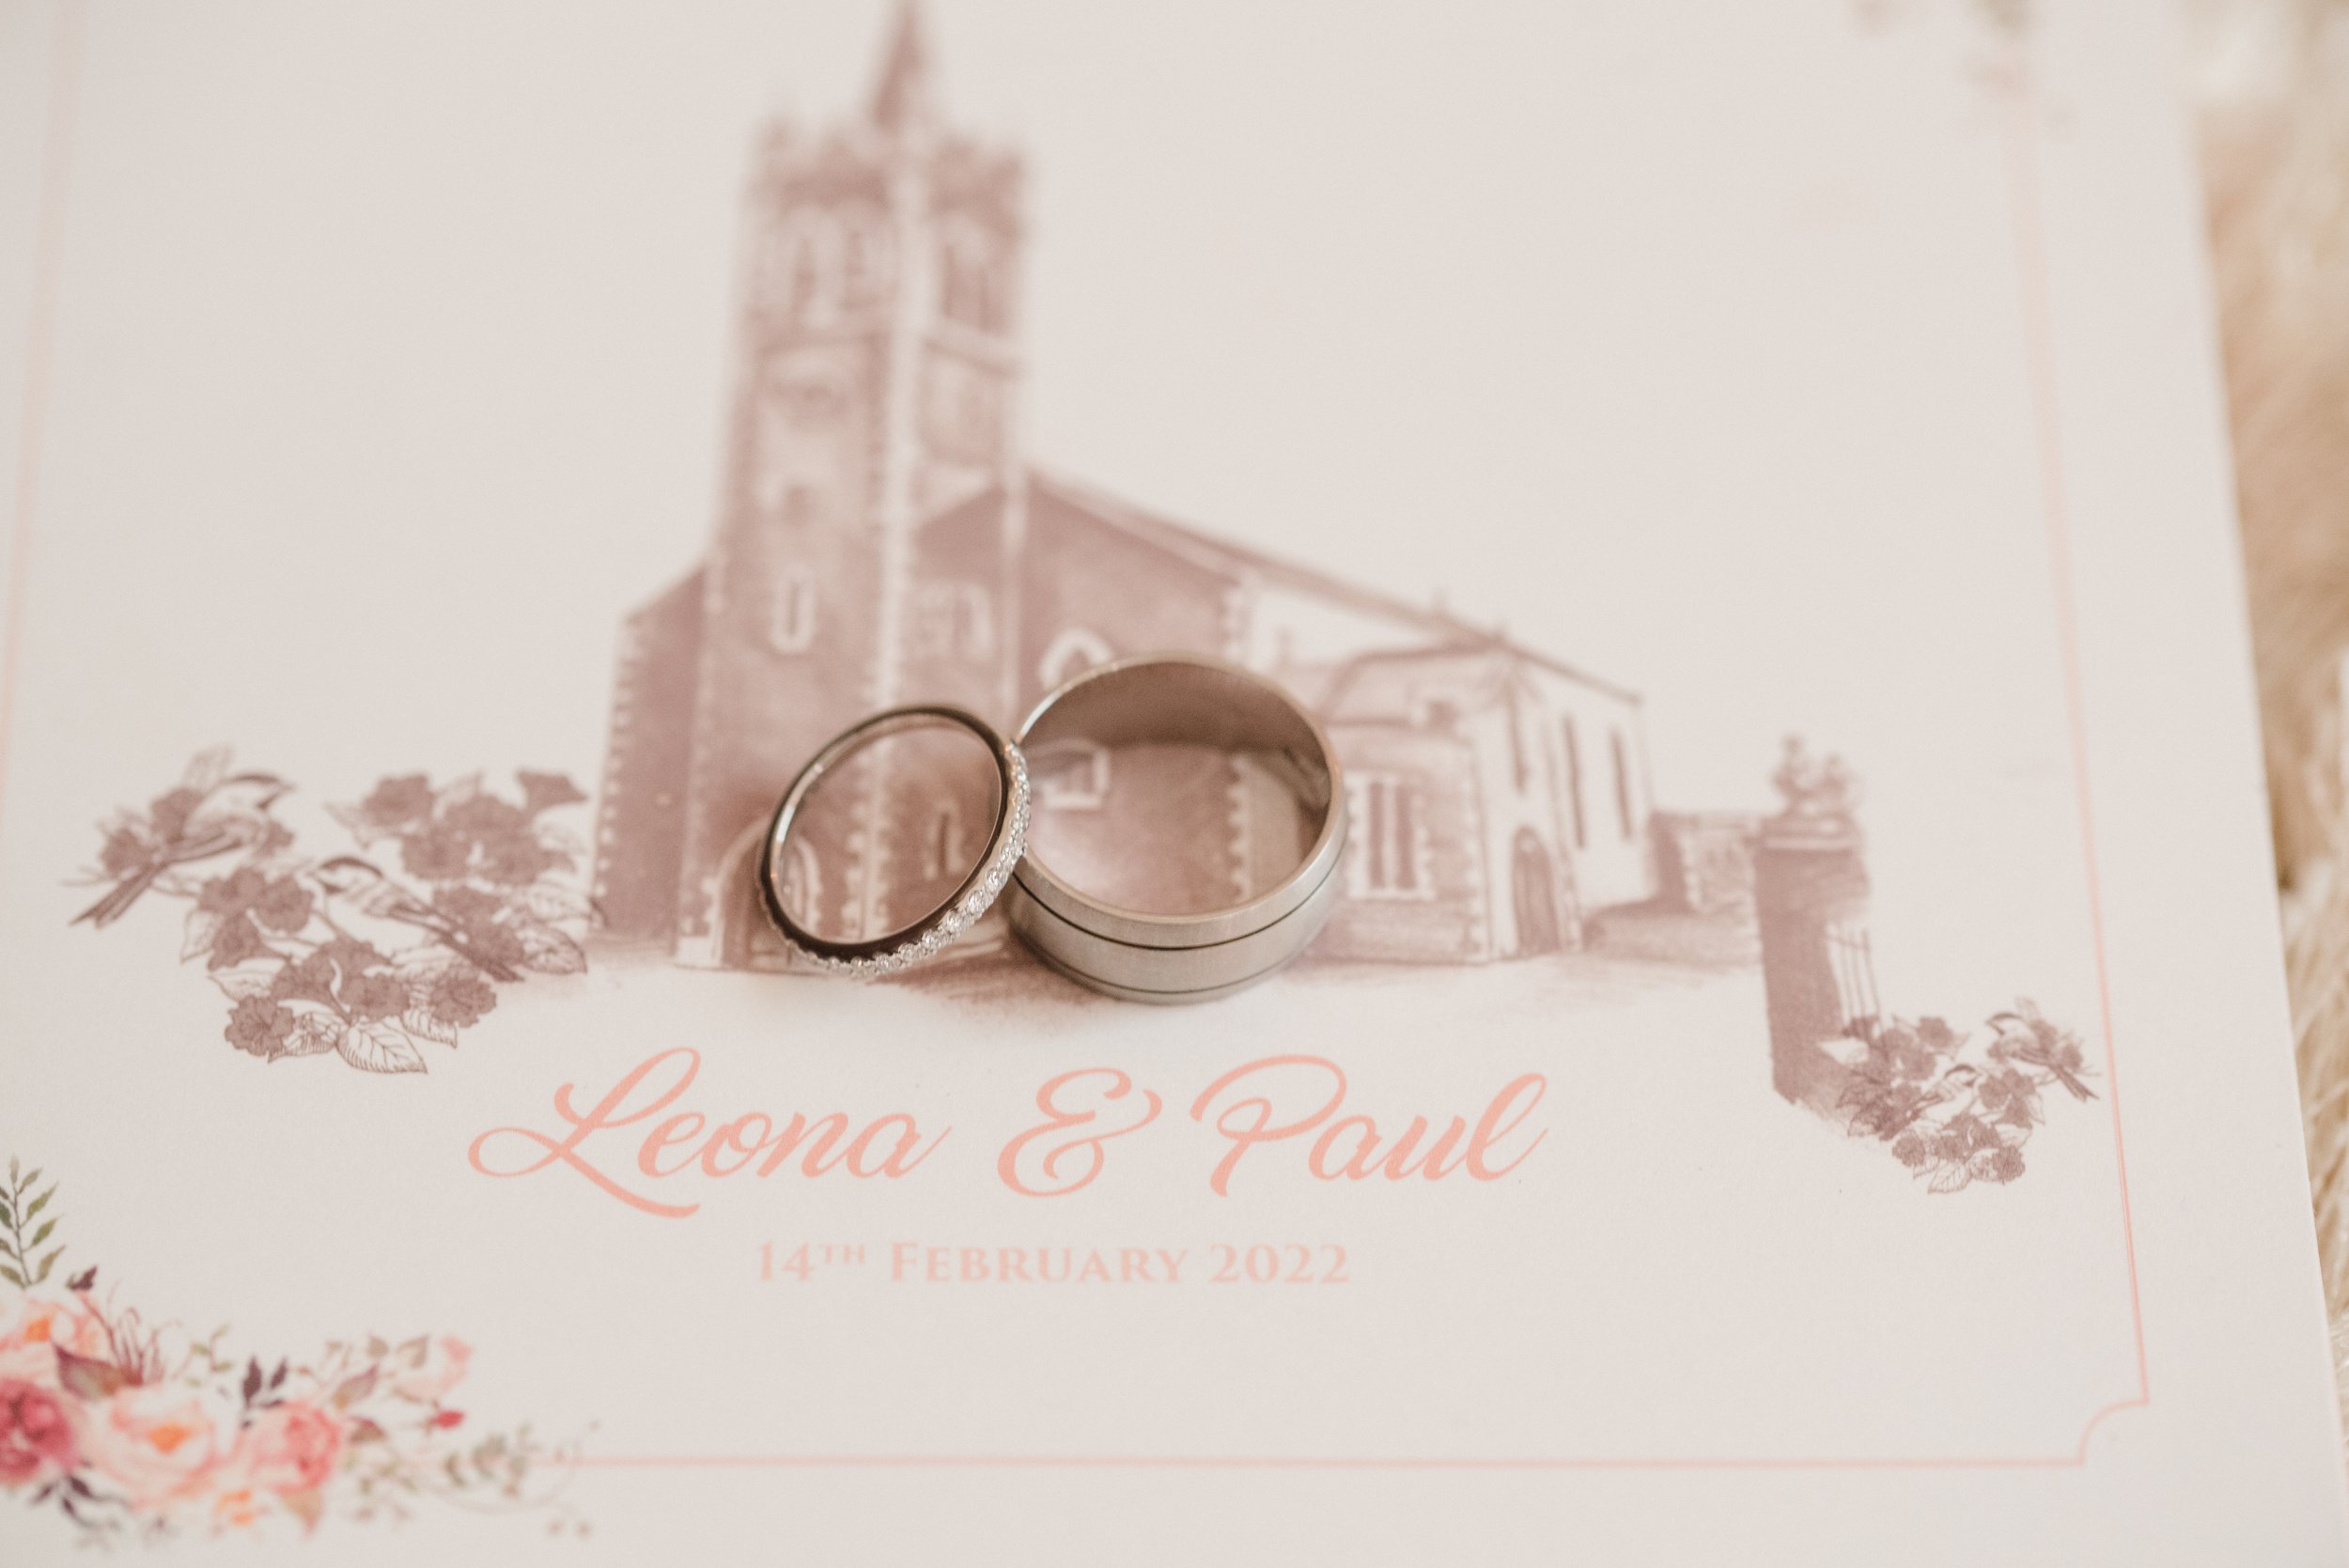 Leona & Paul - Tyrone to Corick House Tyrone - Paula Donnelly Omagh1.jpg